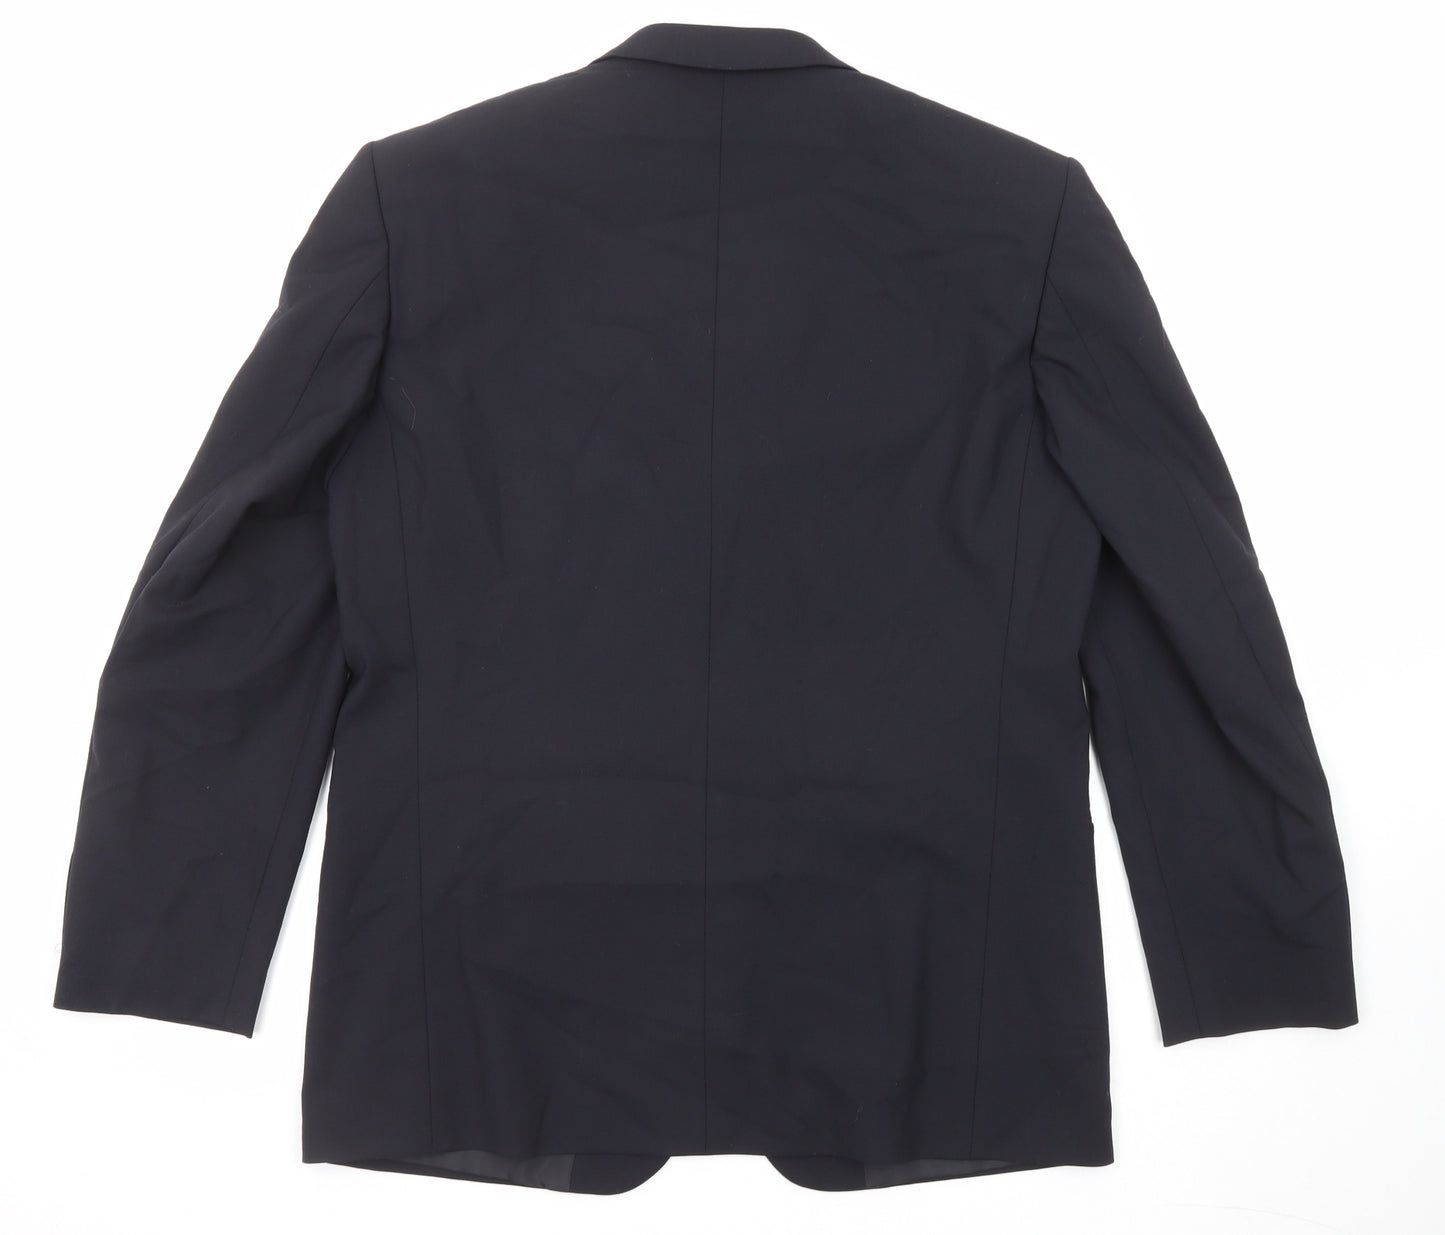 Armando Mens Black Wool Jacket Suit Jacket Size 42 Regular